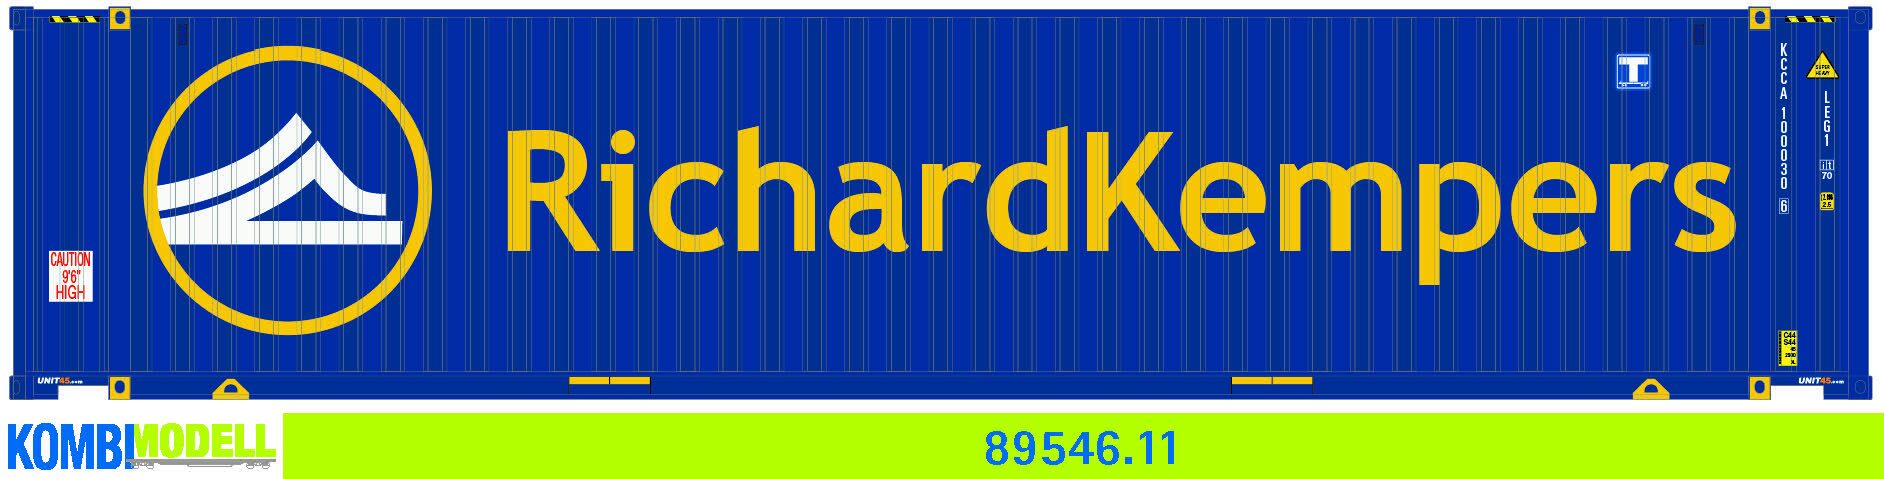 Kombimodell 89546.11 WB-A /Ct 45' (Euro) Richard Kempers"  (neues Logo" KCCU 100030